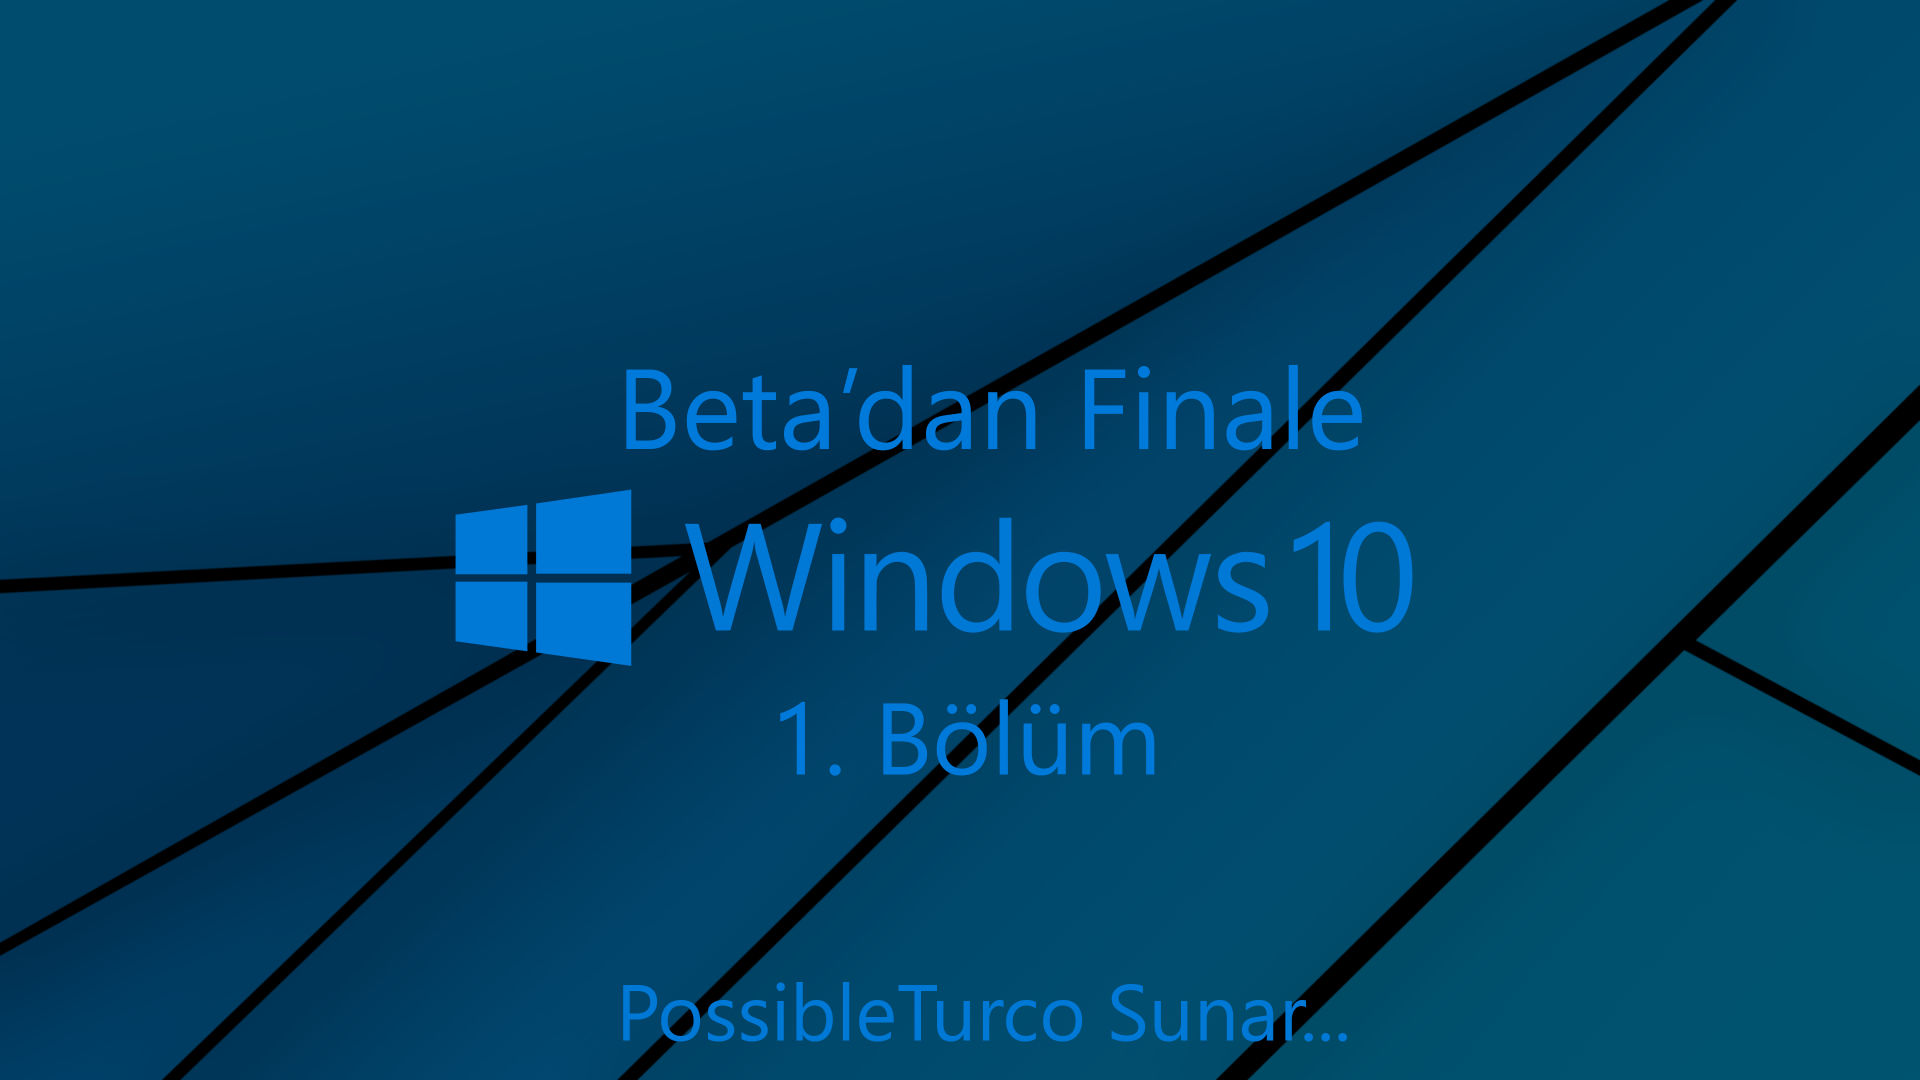 Betadan Finale Windows 10 1. Bölüm.png